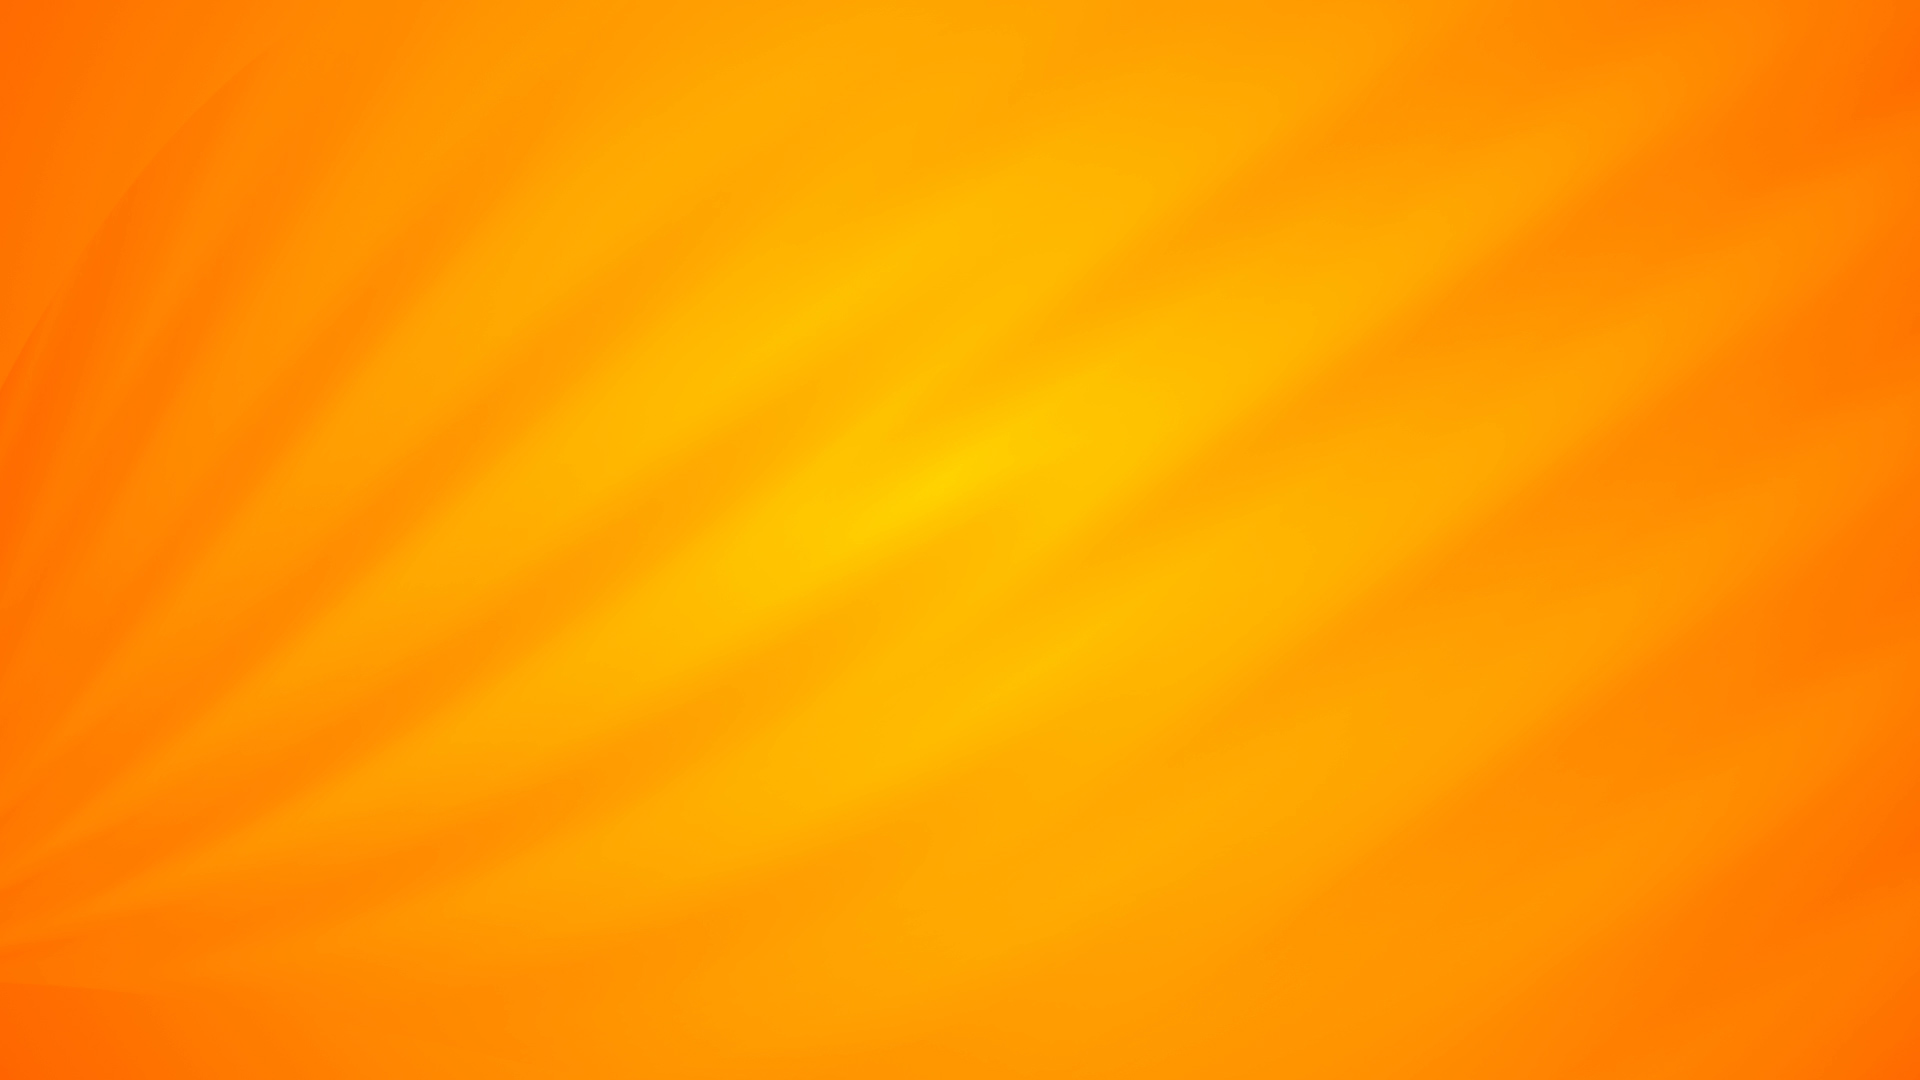 Bright Orange Background Image Amp Pictures Becuo